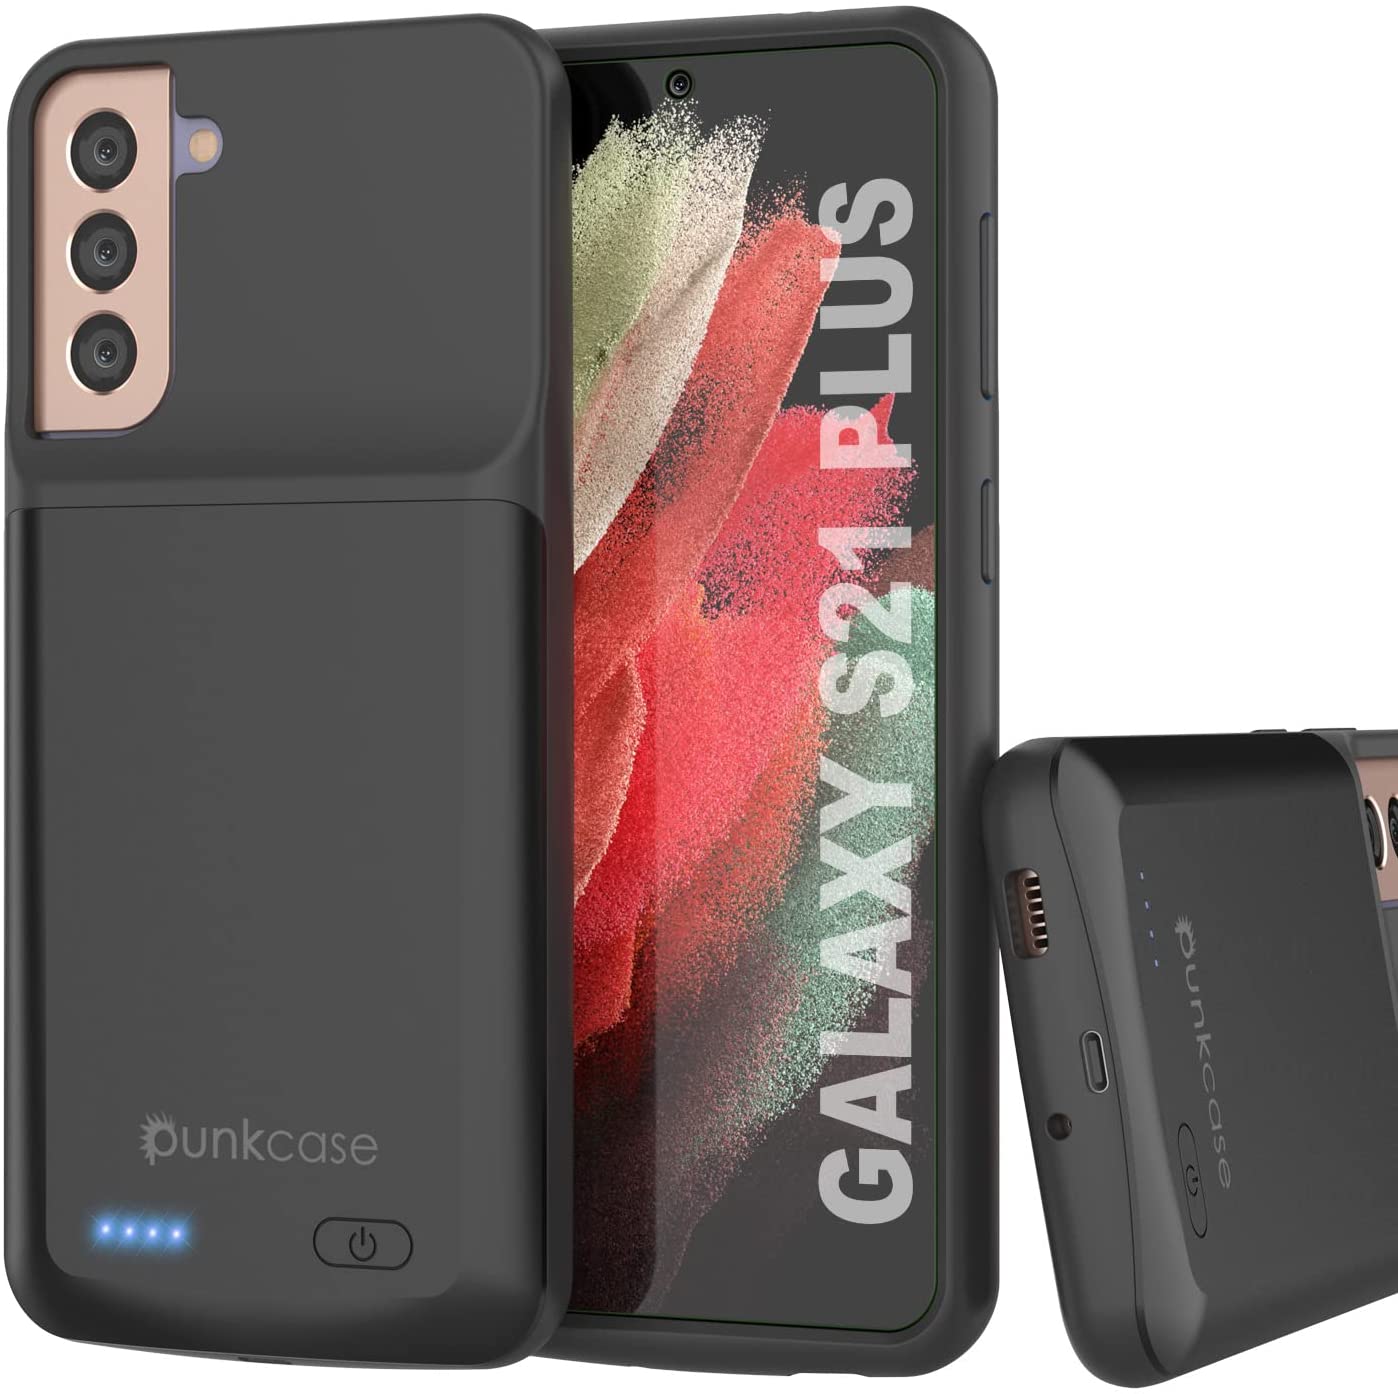 PunkJuice S21+ Plus Battery Case Black - Portable Charging Power Juice Bank with 6000mAh